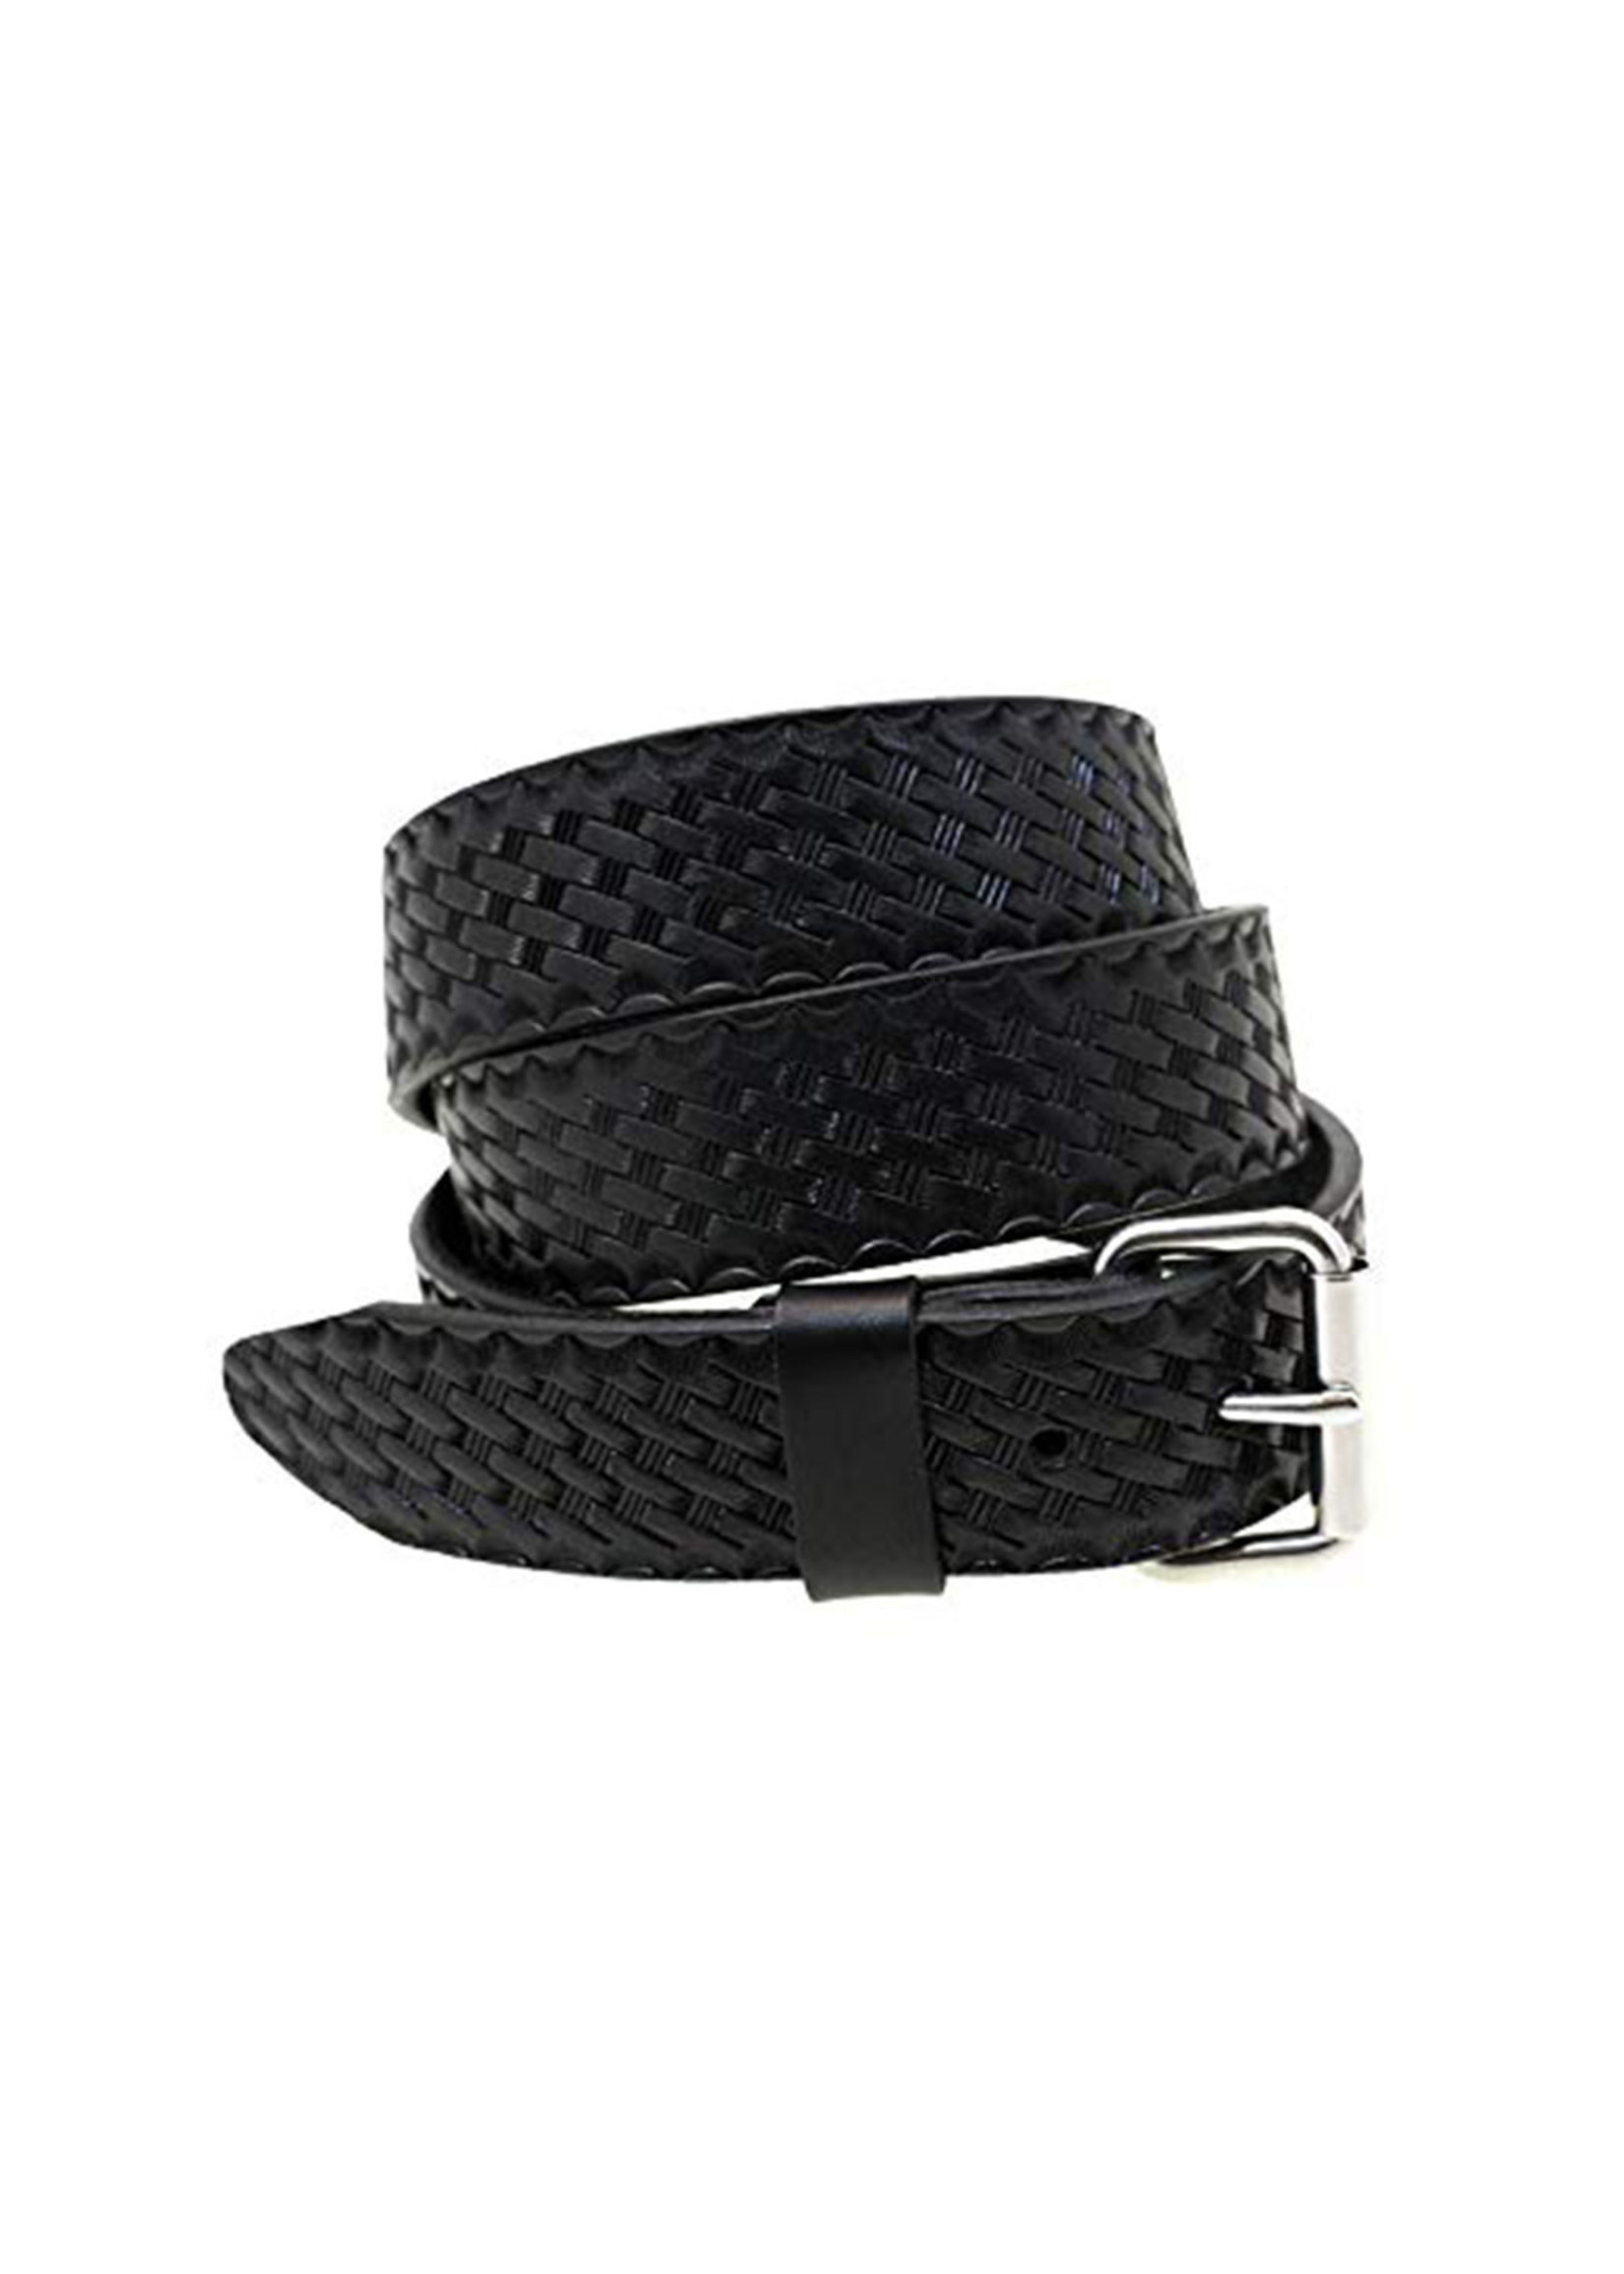 Black basket weave belt with silver buckle